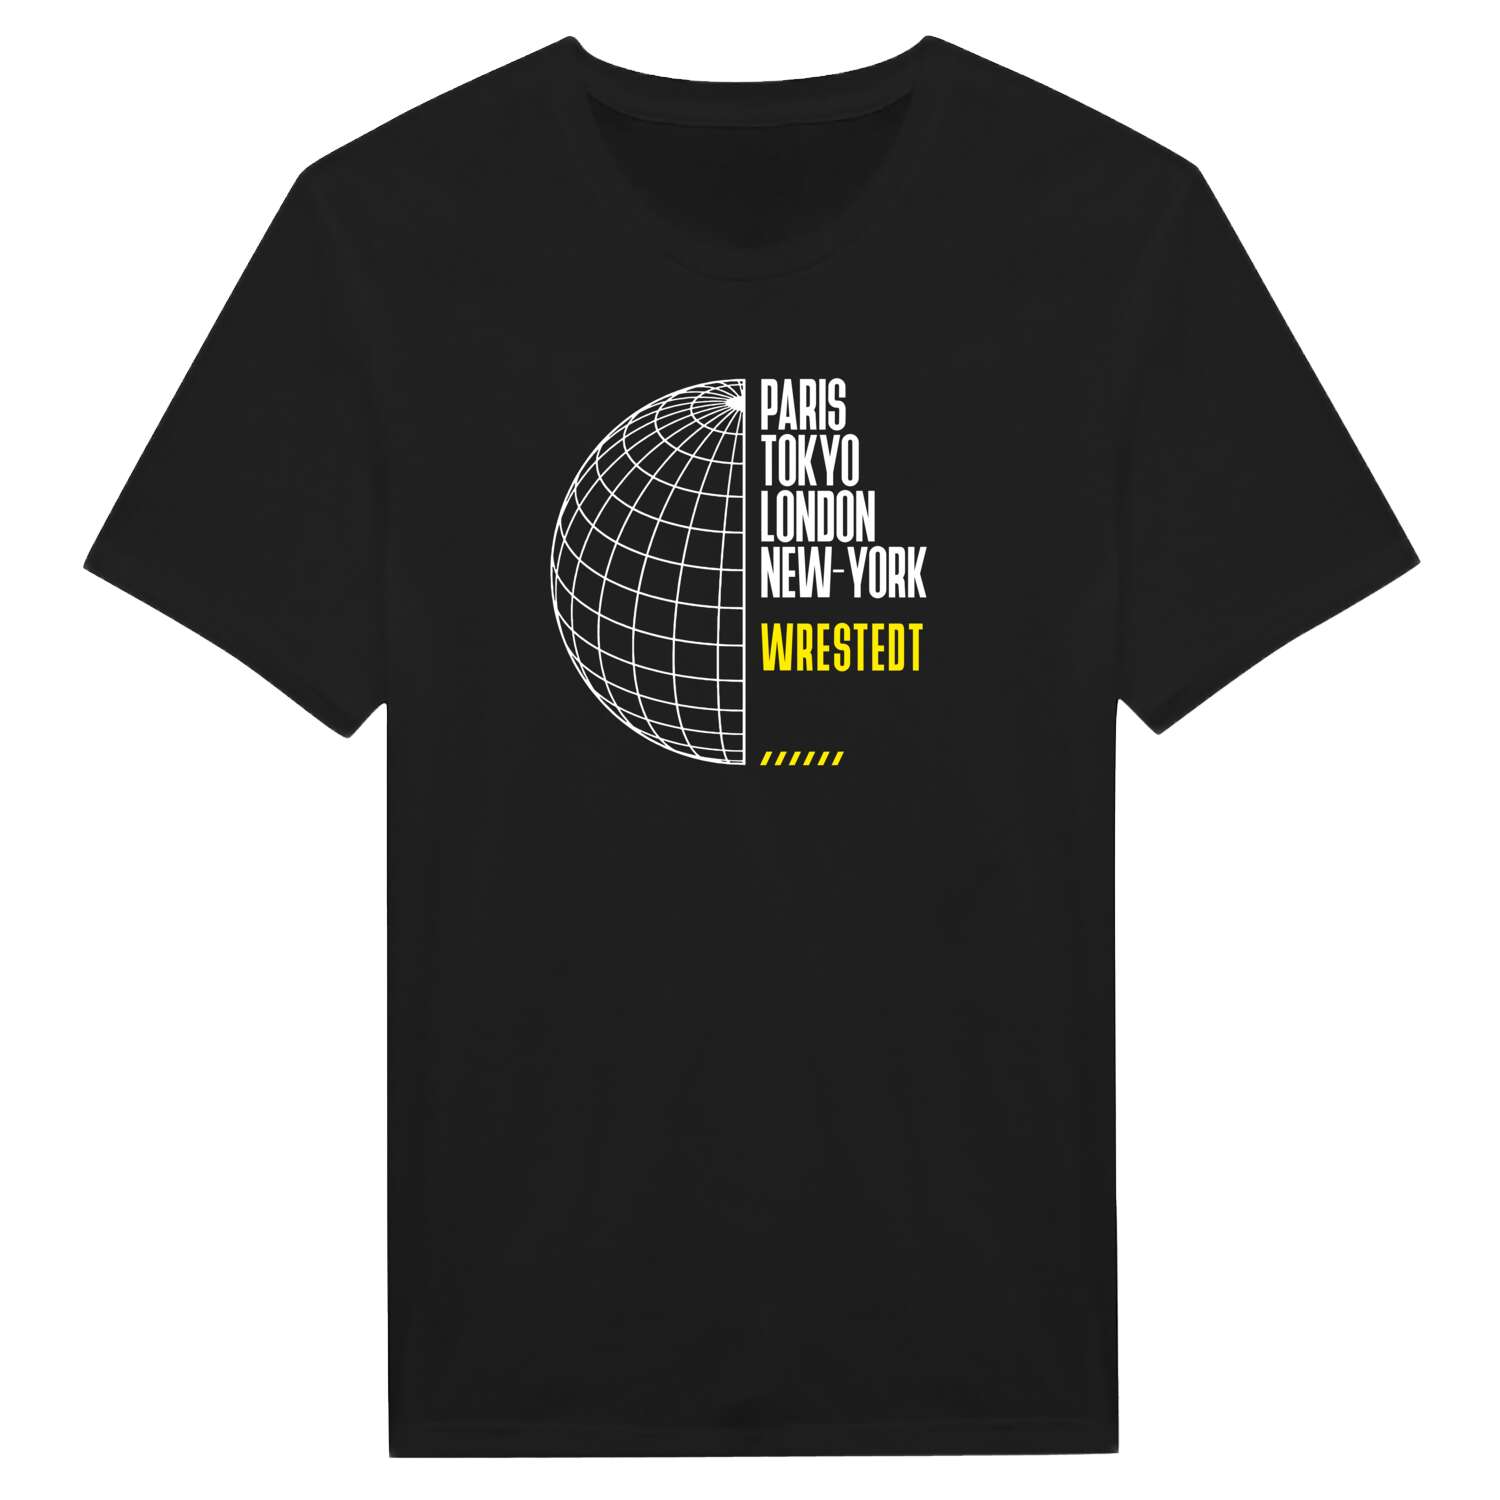 Wrestedt T-Shirt »Paris Tokyo London«